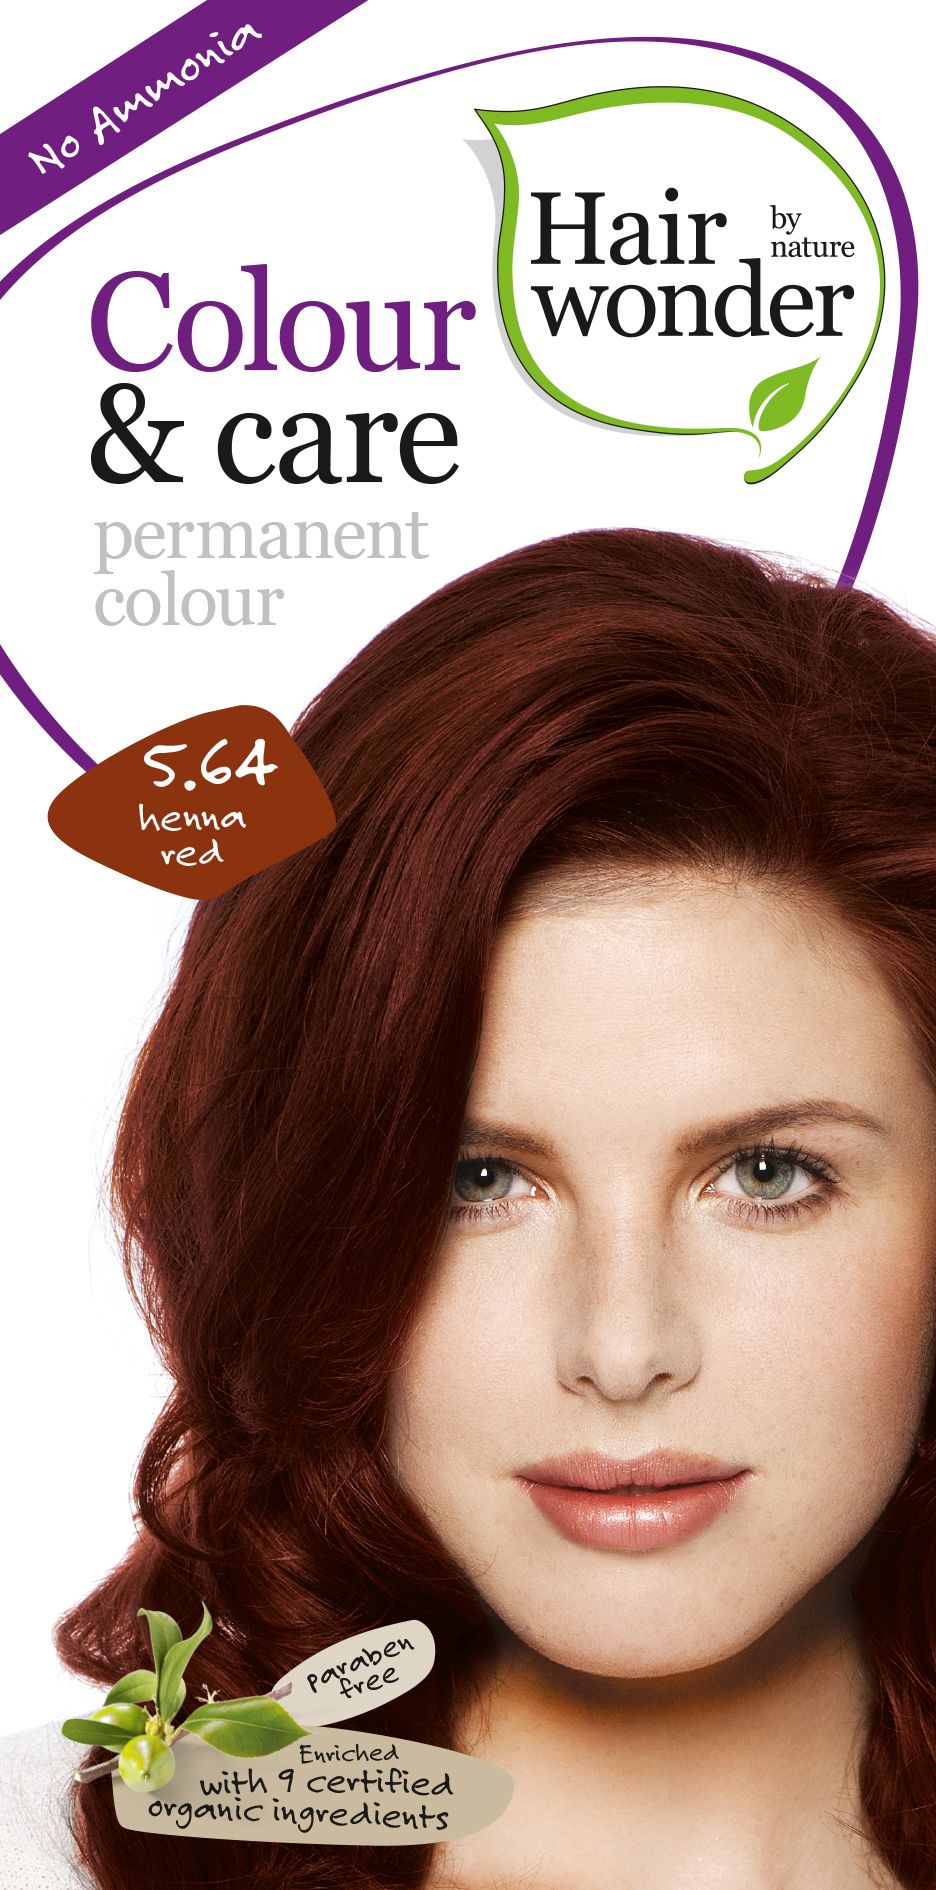 Hairwonder Colour & Care Henna Red 5.64